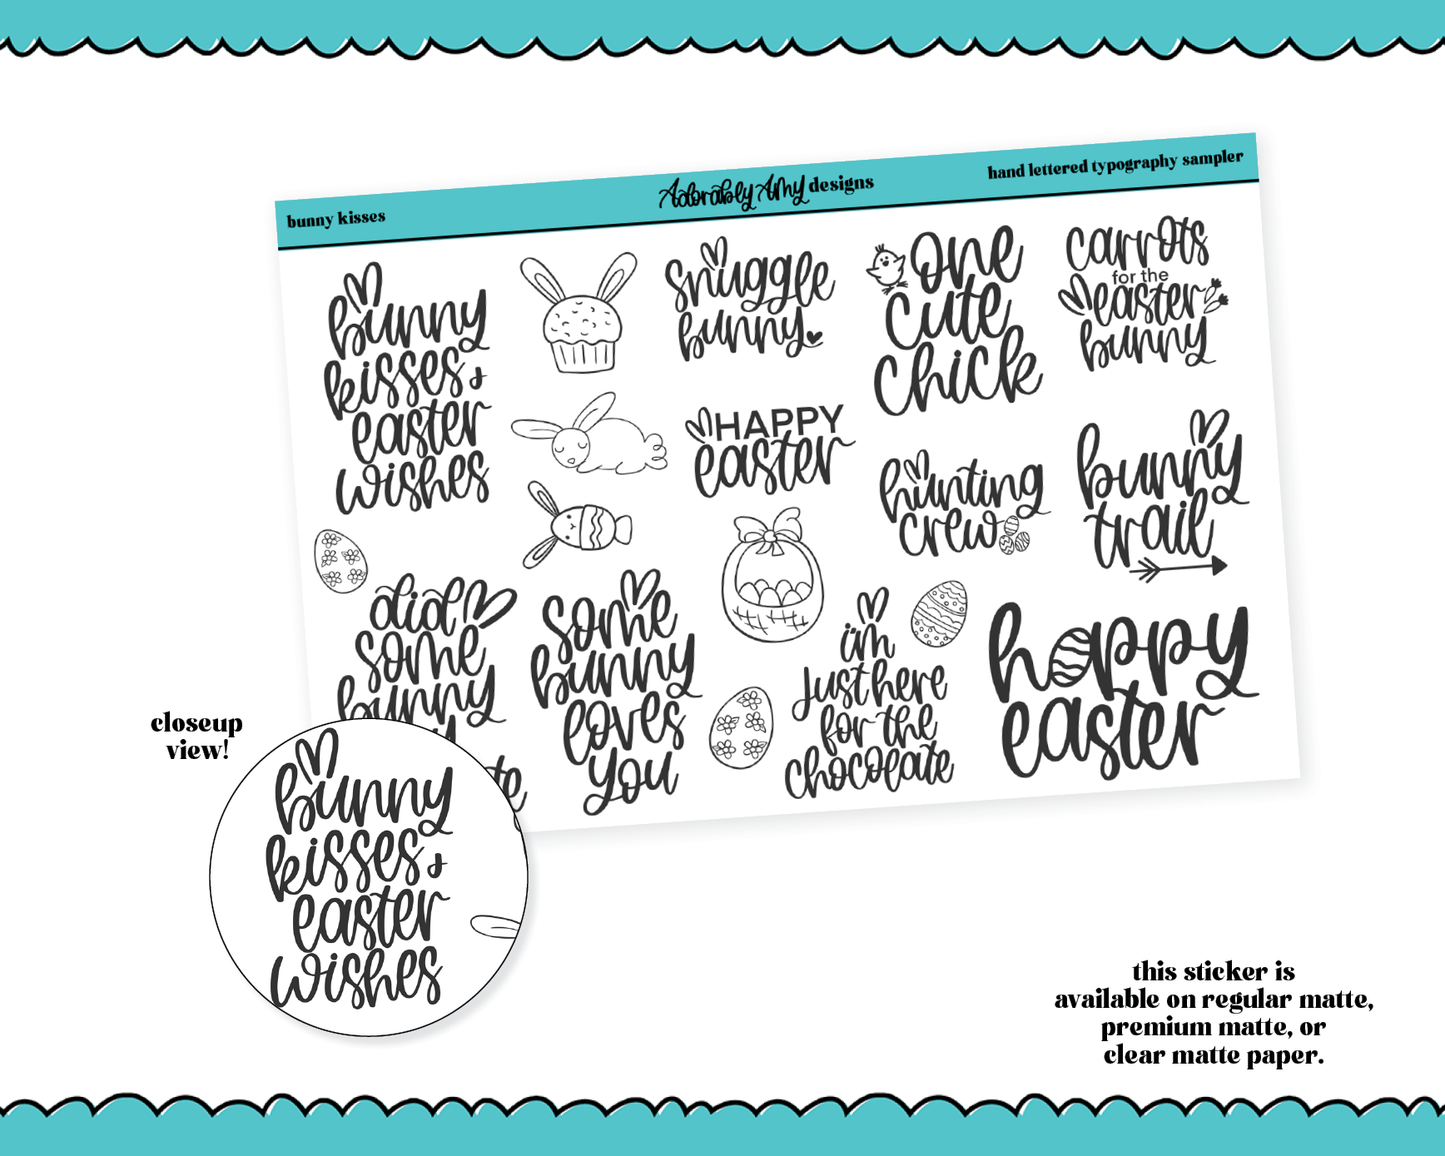 Hand Lettered Bunny Kisses Typography Sampler Planner Stickers for any Planner or Insert